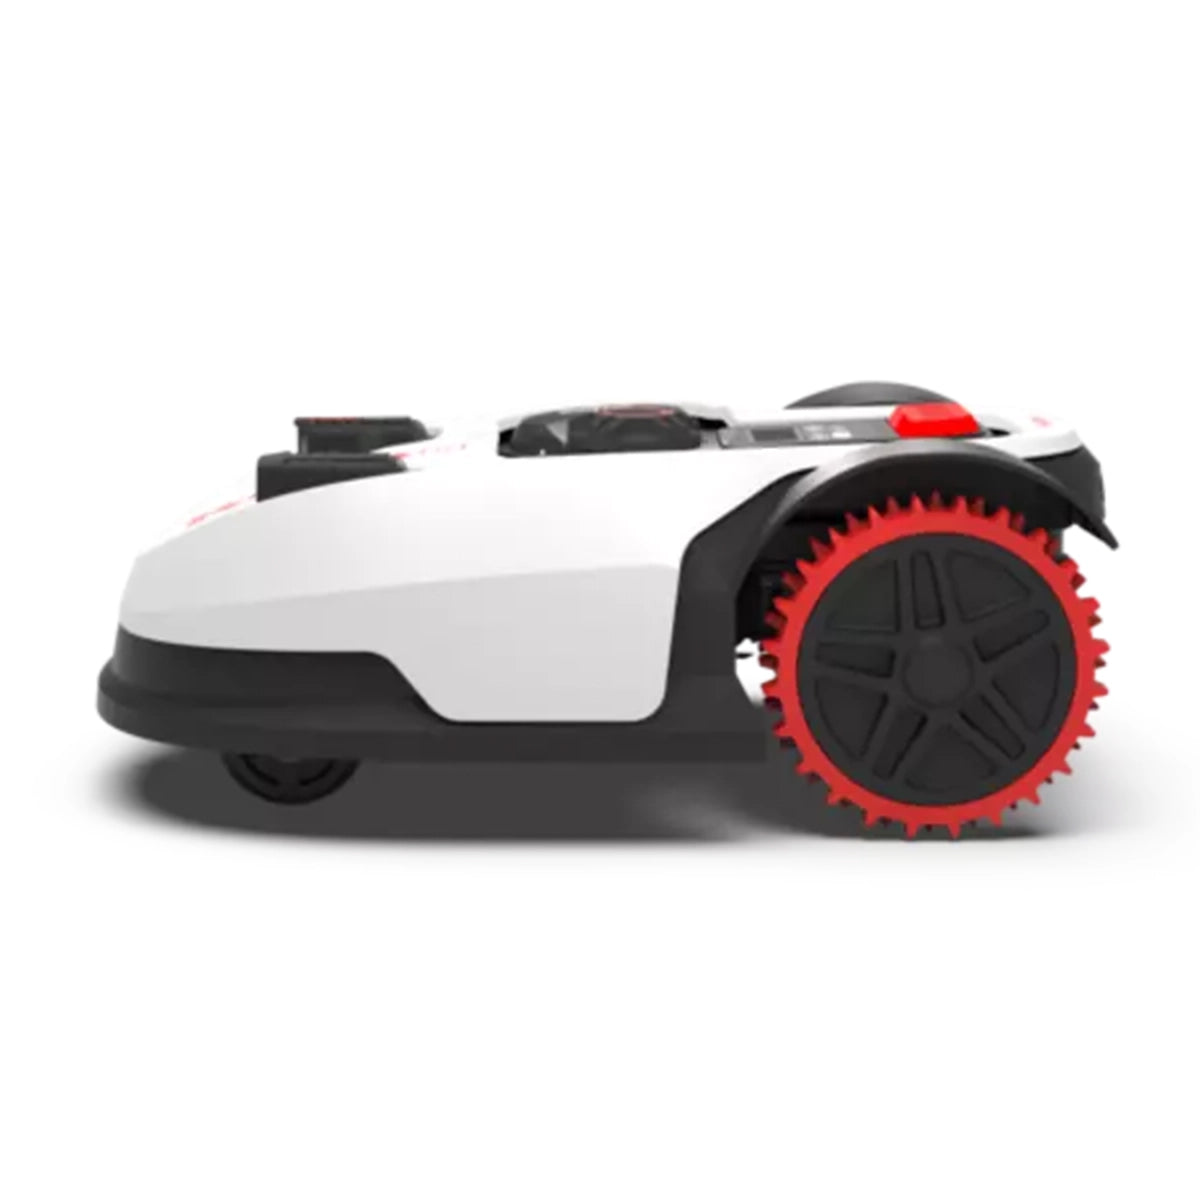 Kress KR121E Mission 1000 Robotic Lawn Mower